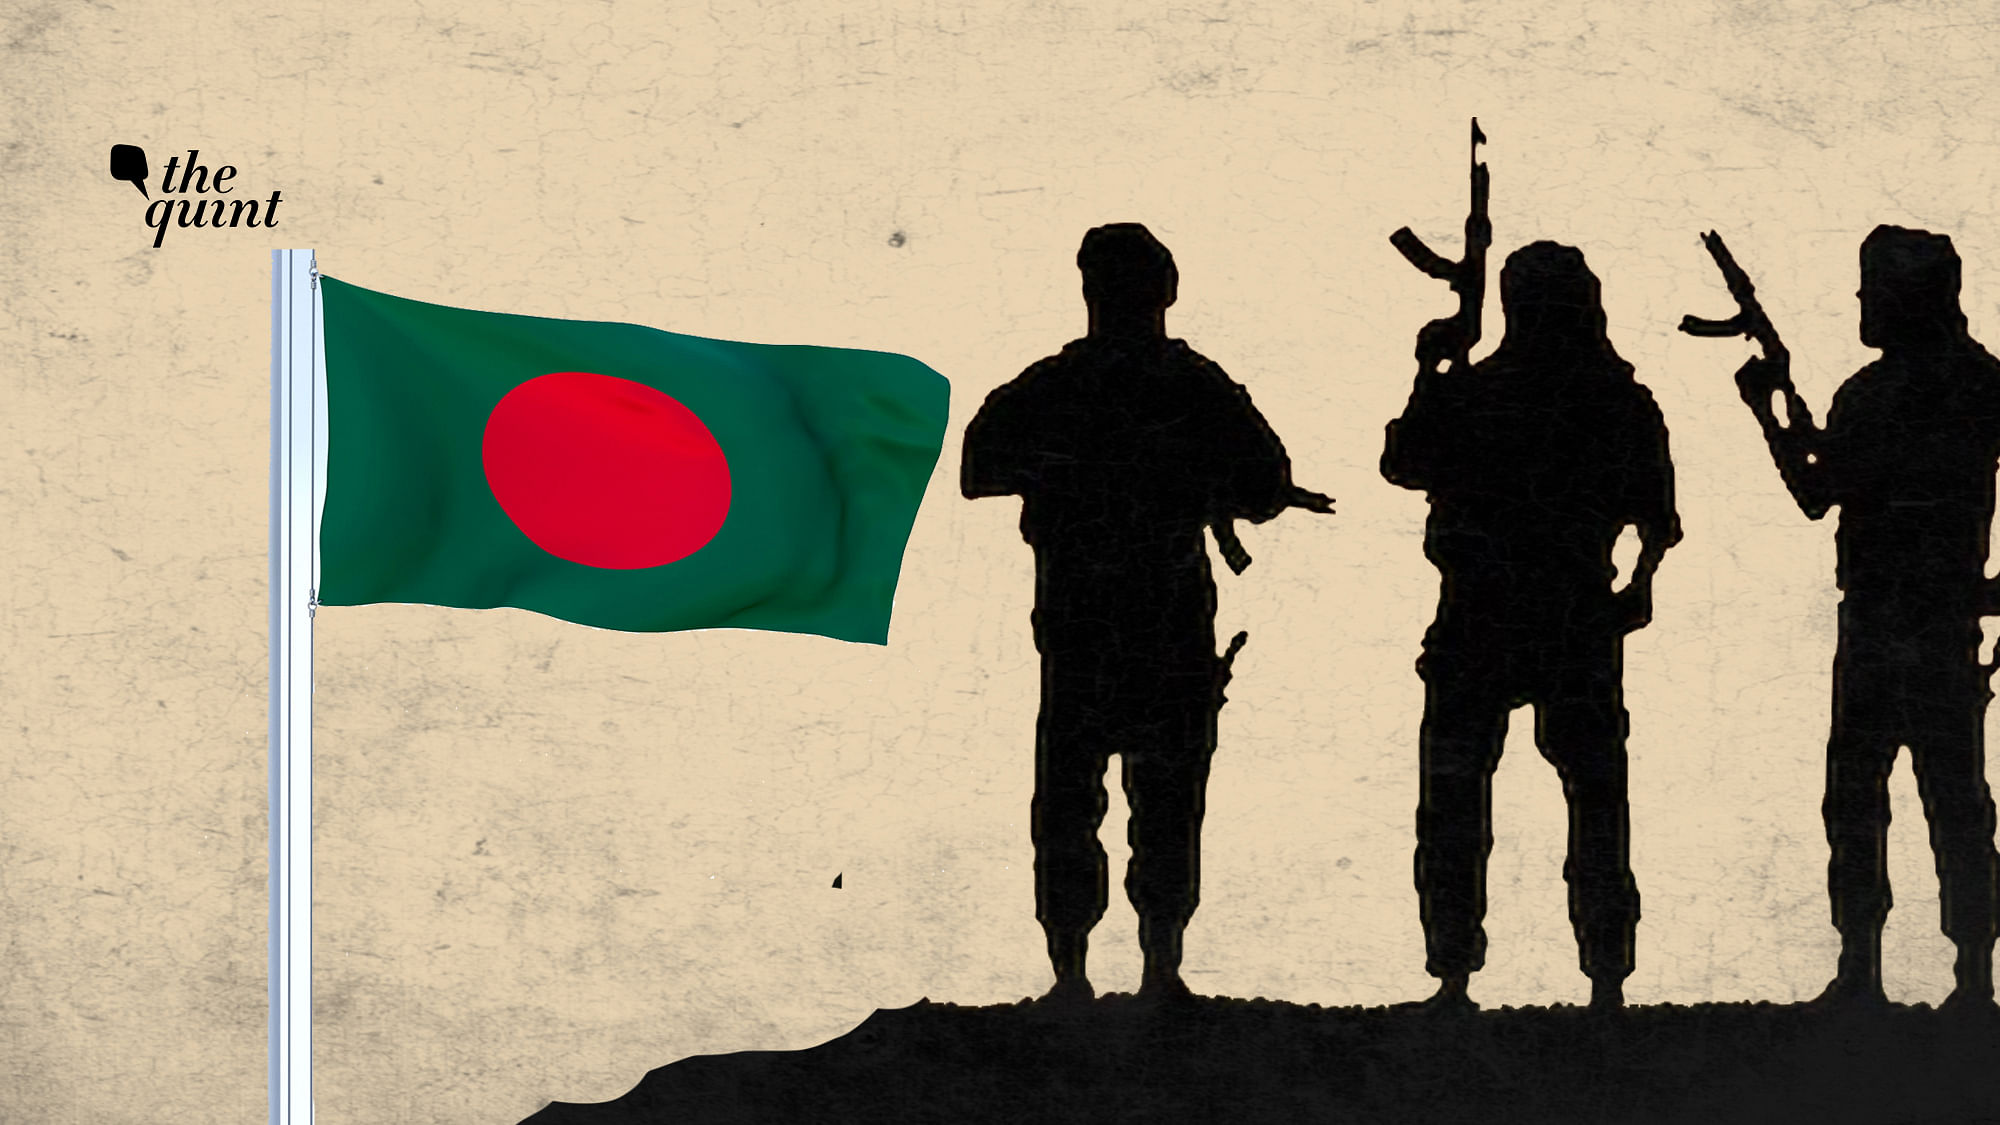 Image of Bangladesh flag used for representational purposes.